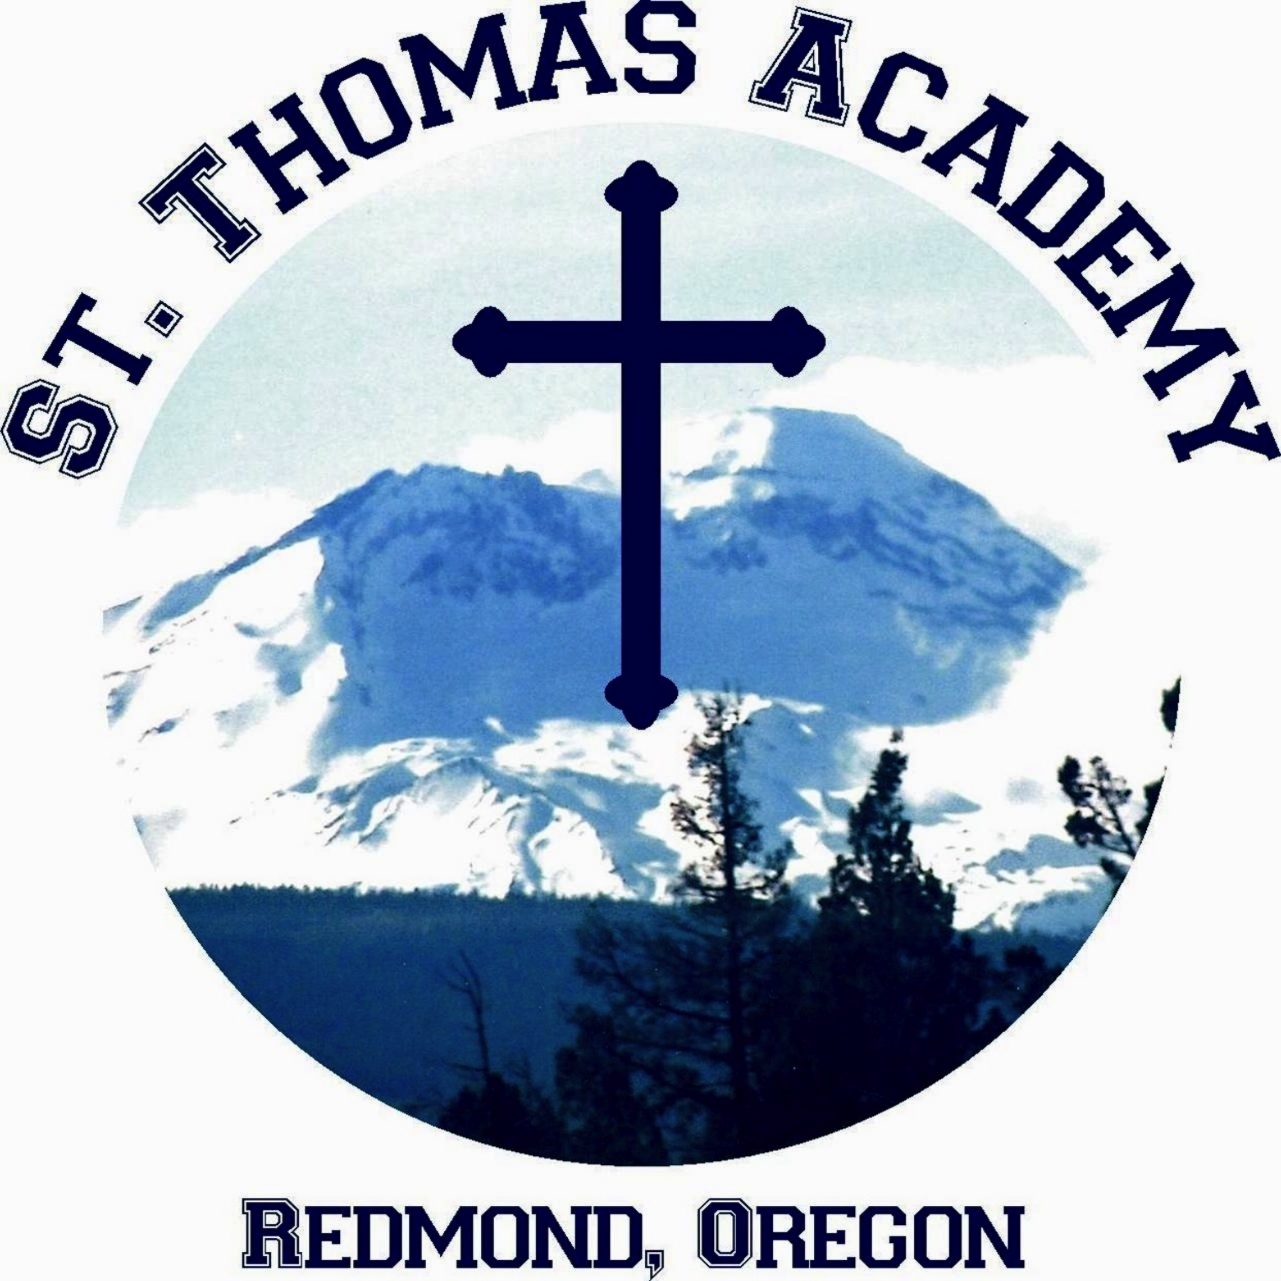 St Thomas Academy